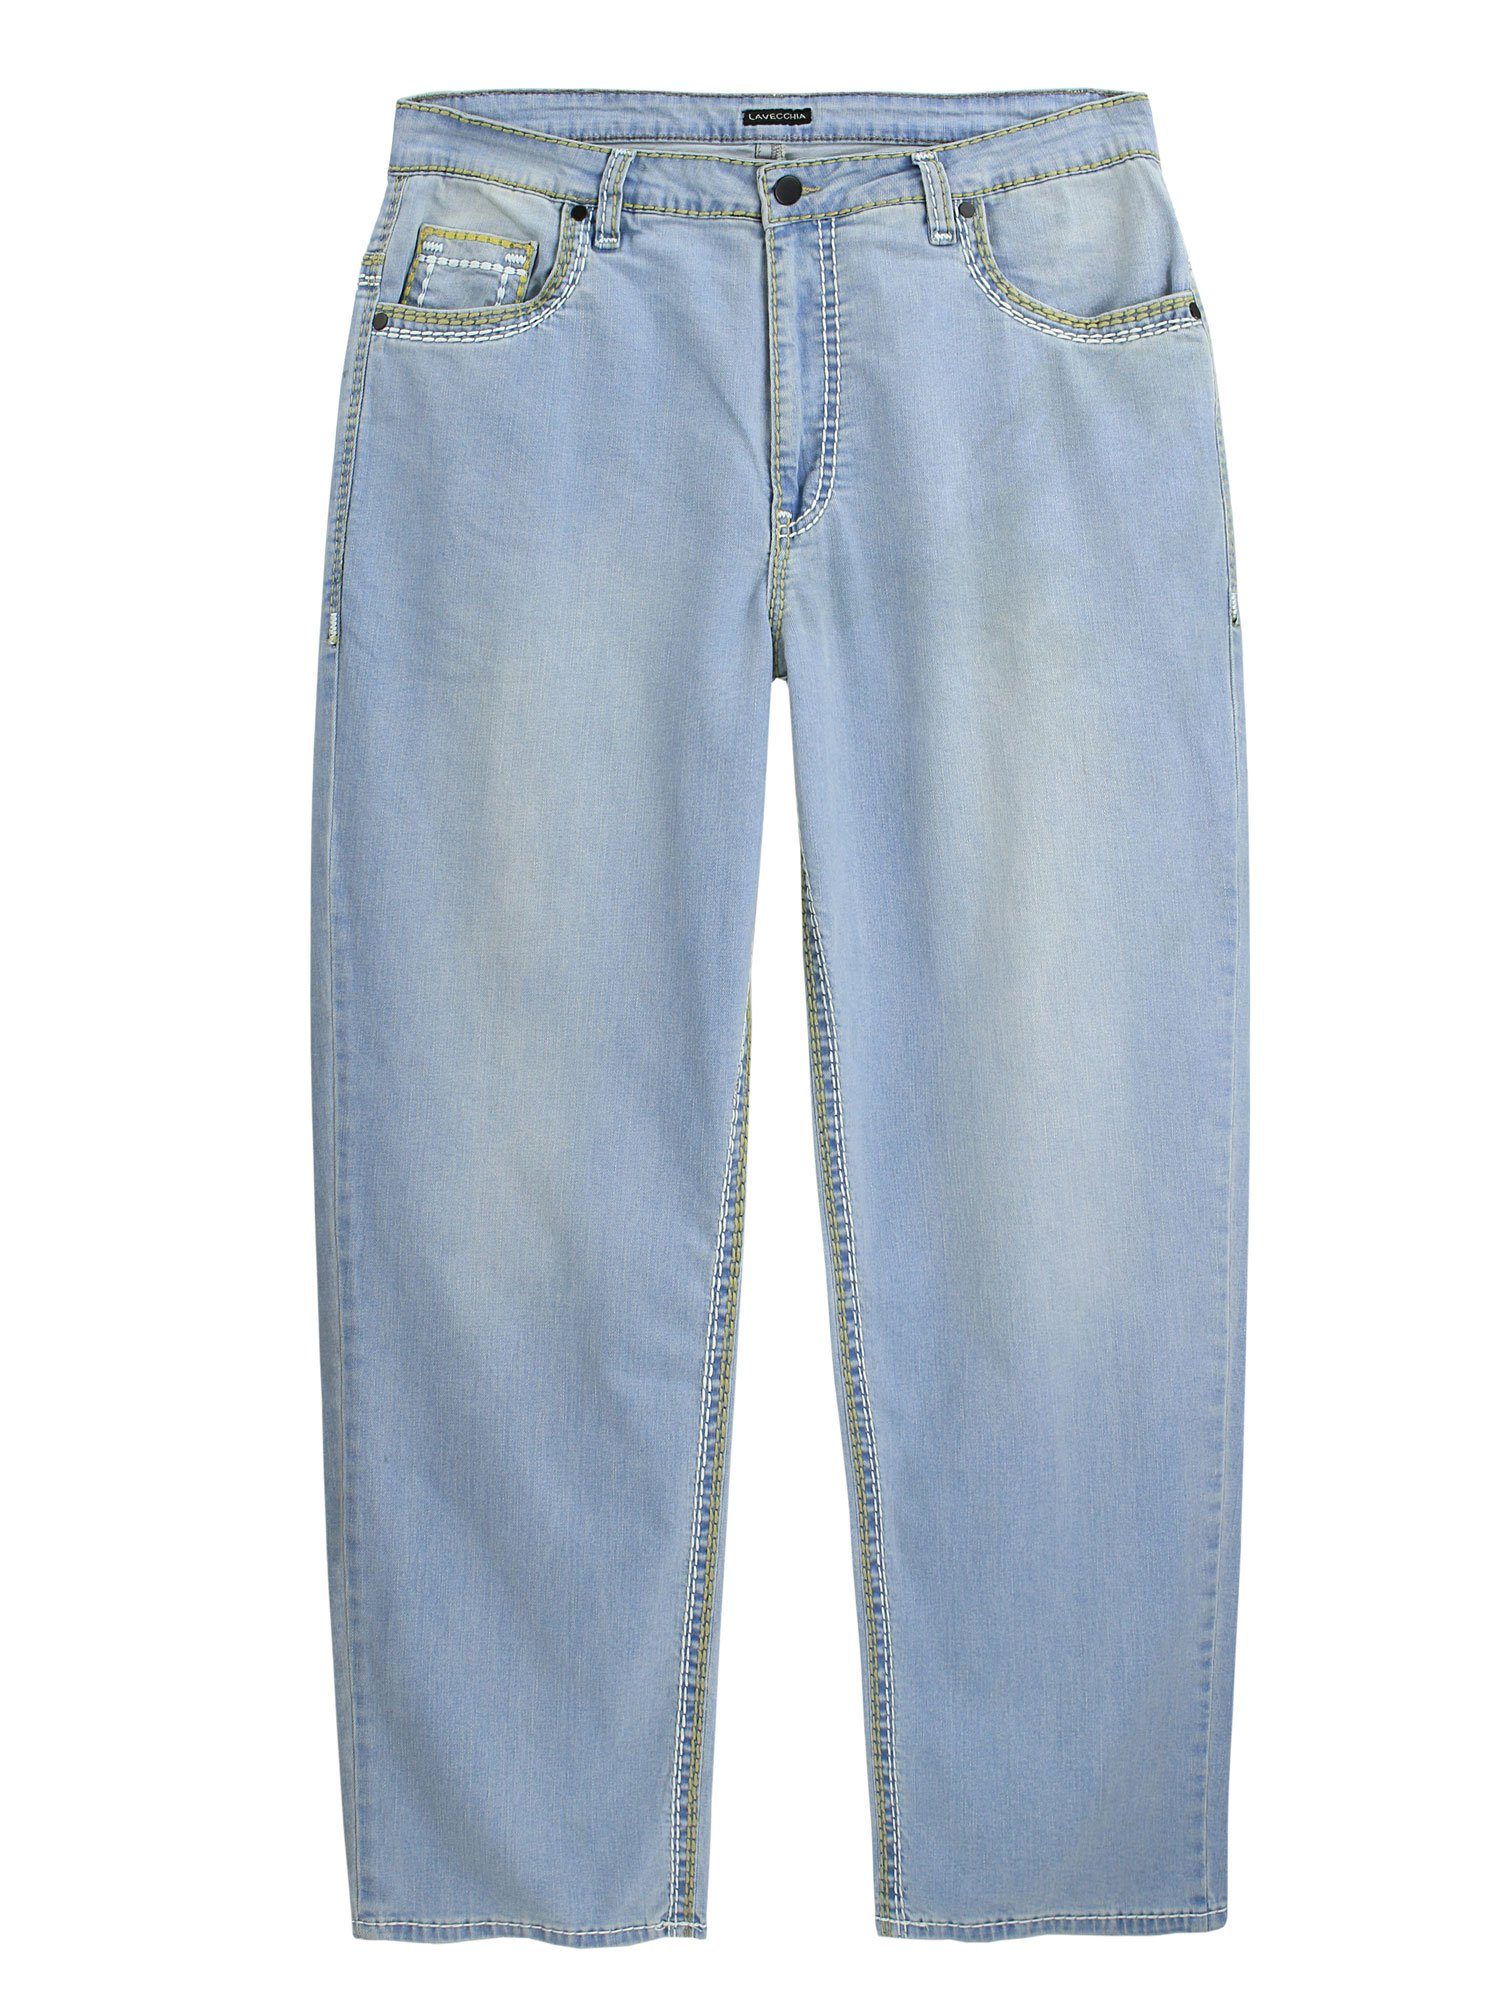 Lavecchia Jeanshose Übergrößen Naht Comfort-fit-Jeans Herren hellblau LV-503 Elasthan & dicker mit Stretch